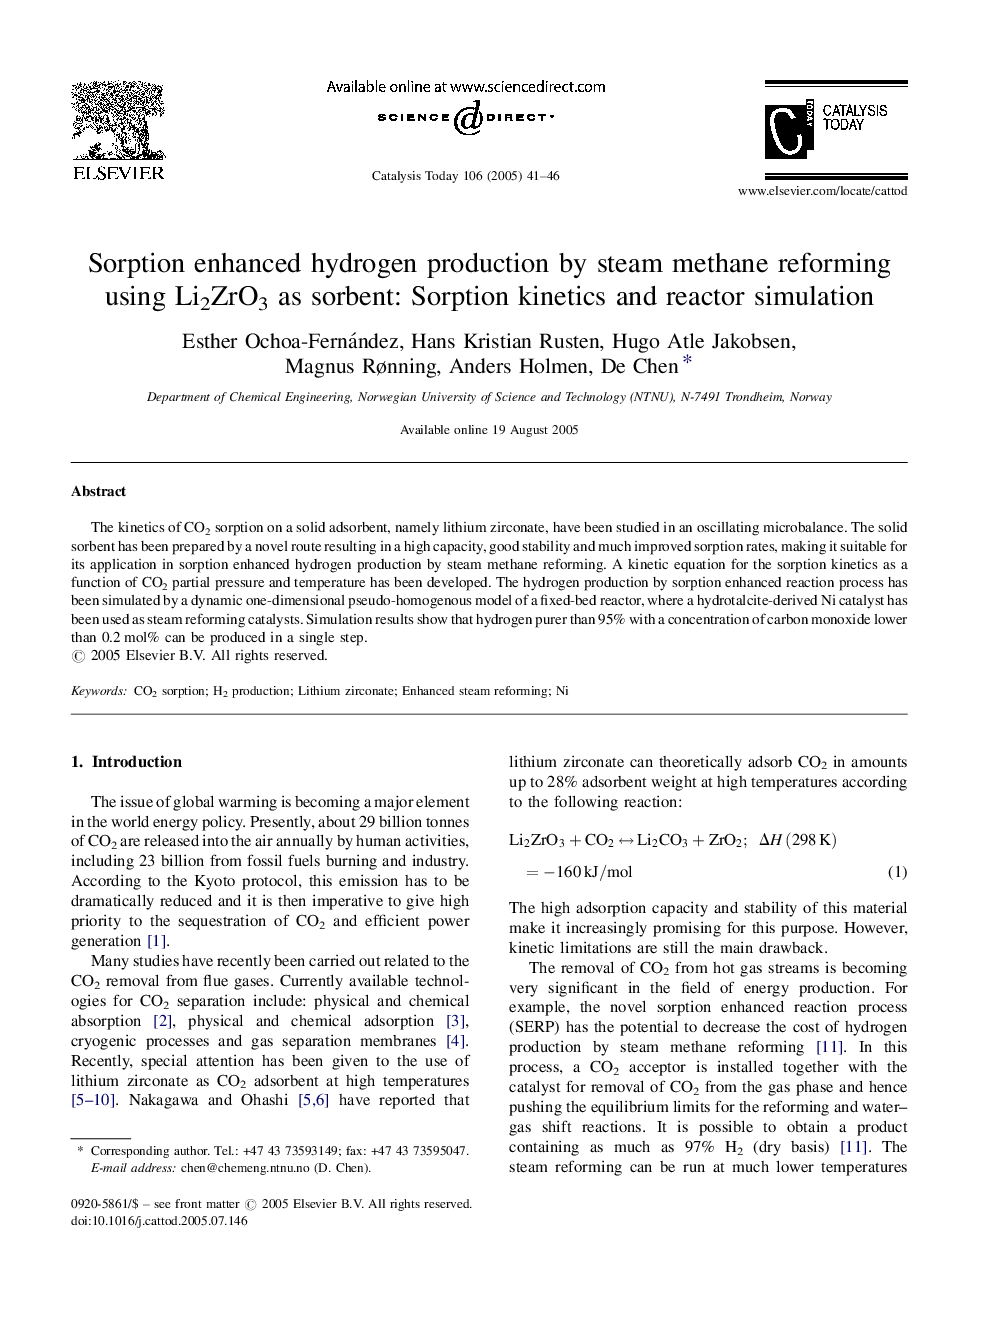 Sorption enhanced hydrogen production by steam methane reforming using Li2ZrO3 as sorbent: Sorption kinetics and reactor simulation